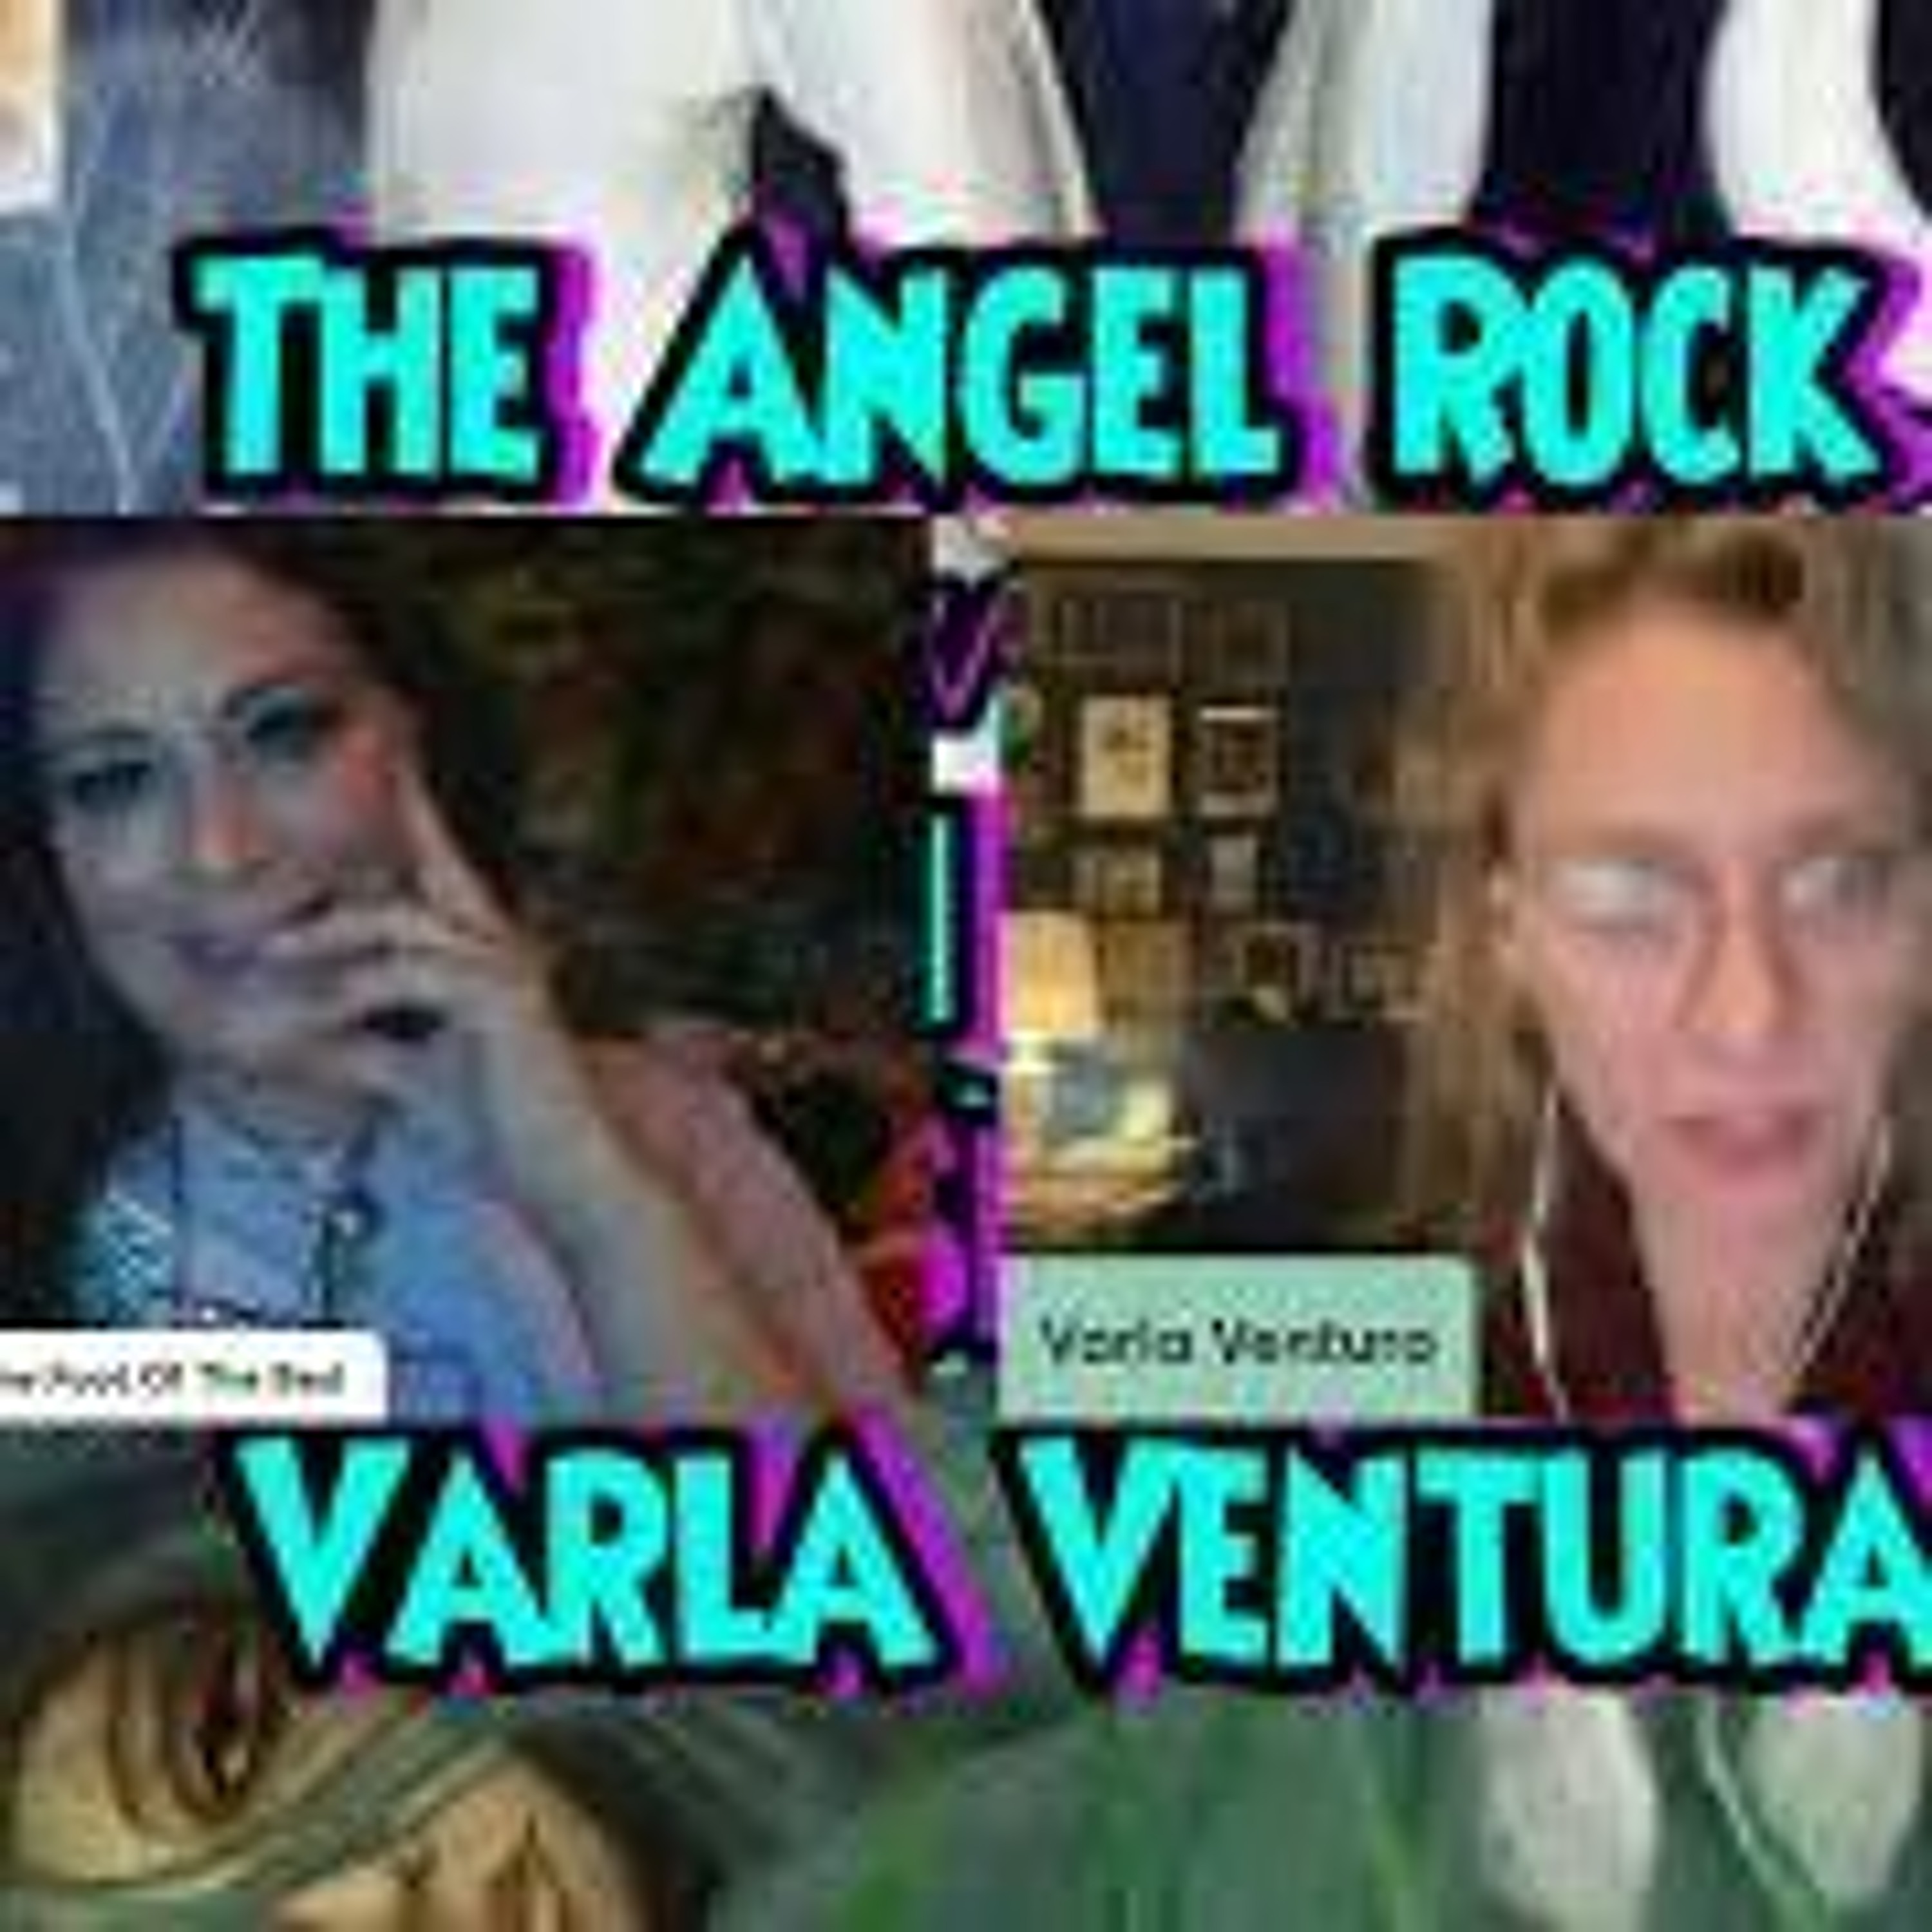 The Angel Rock With Lorilei Potvin & Special Guest Varla Ventura